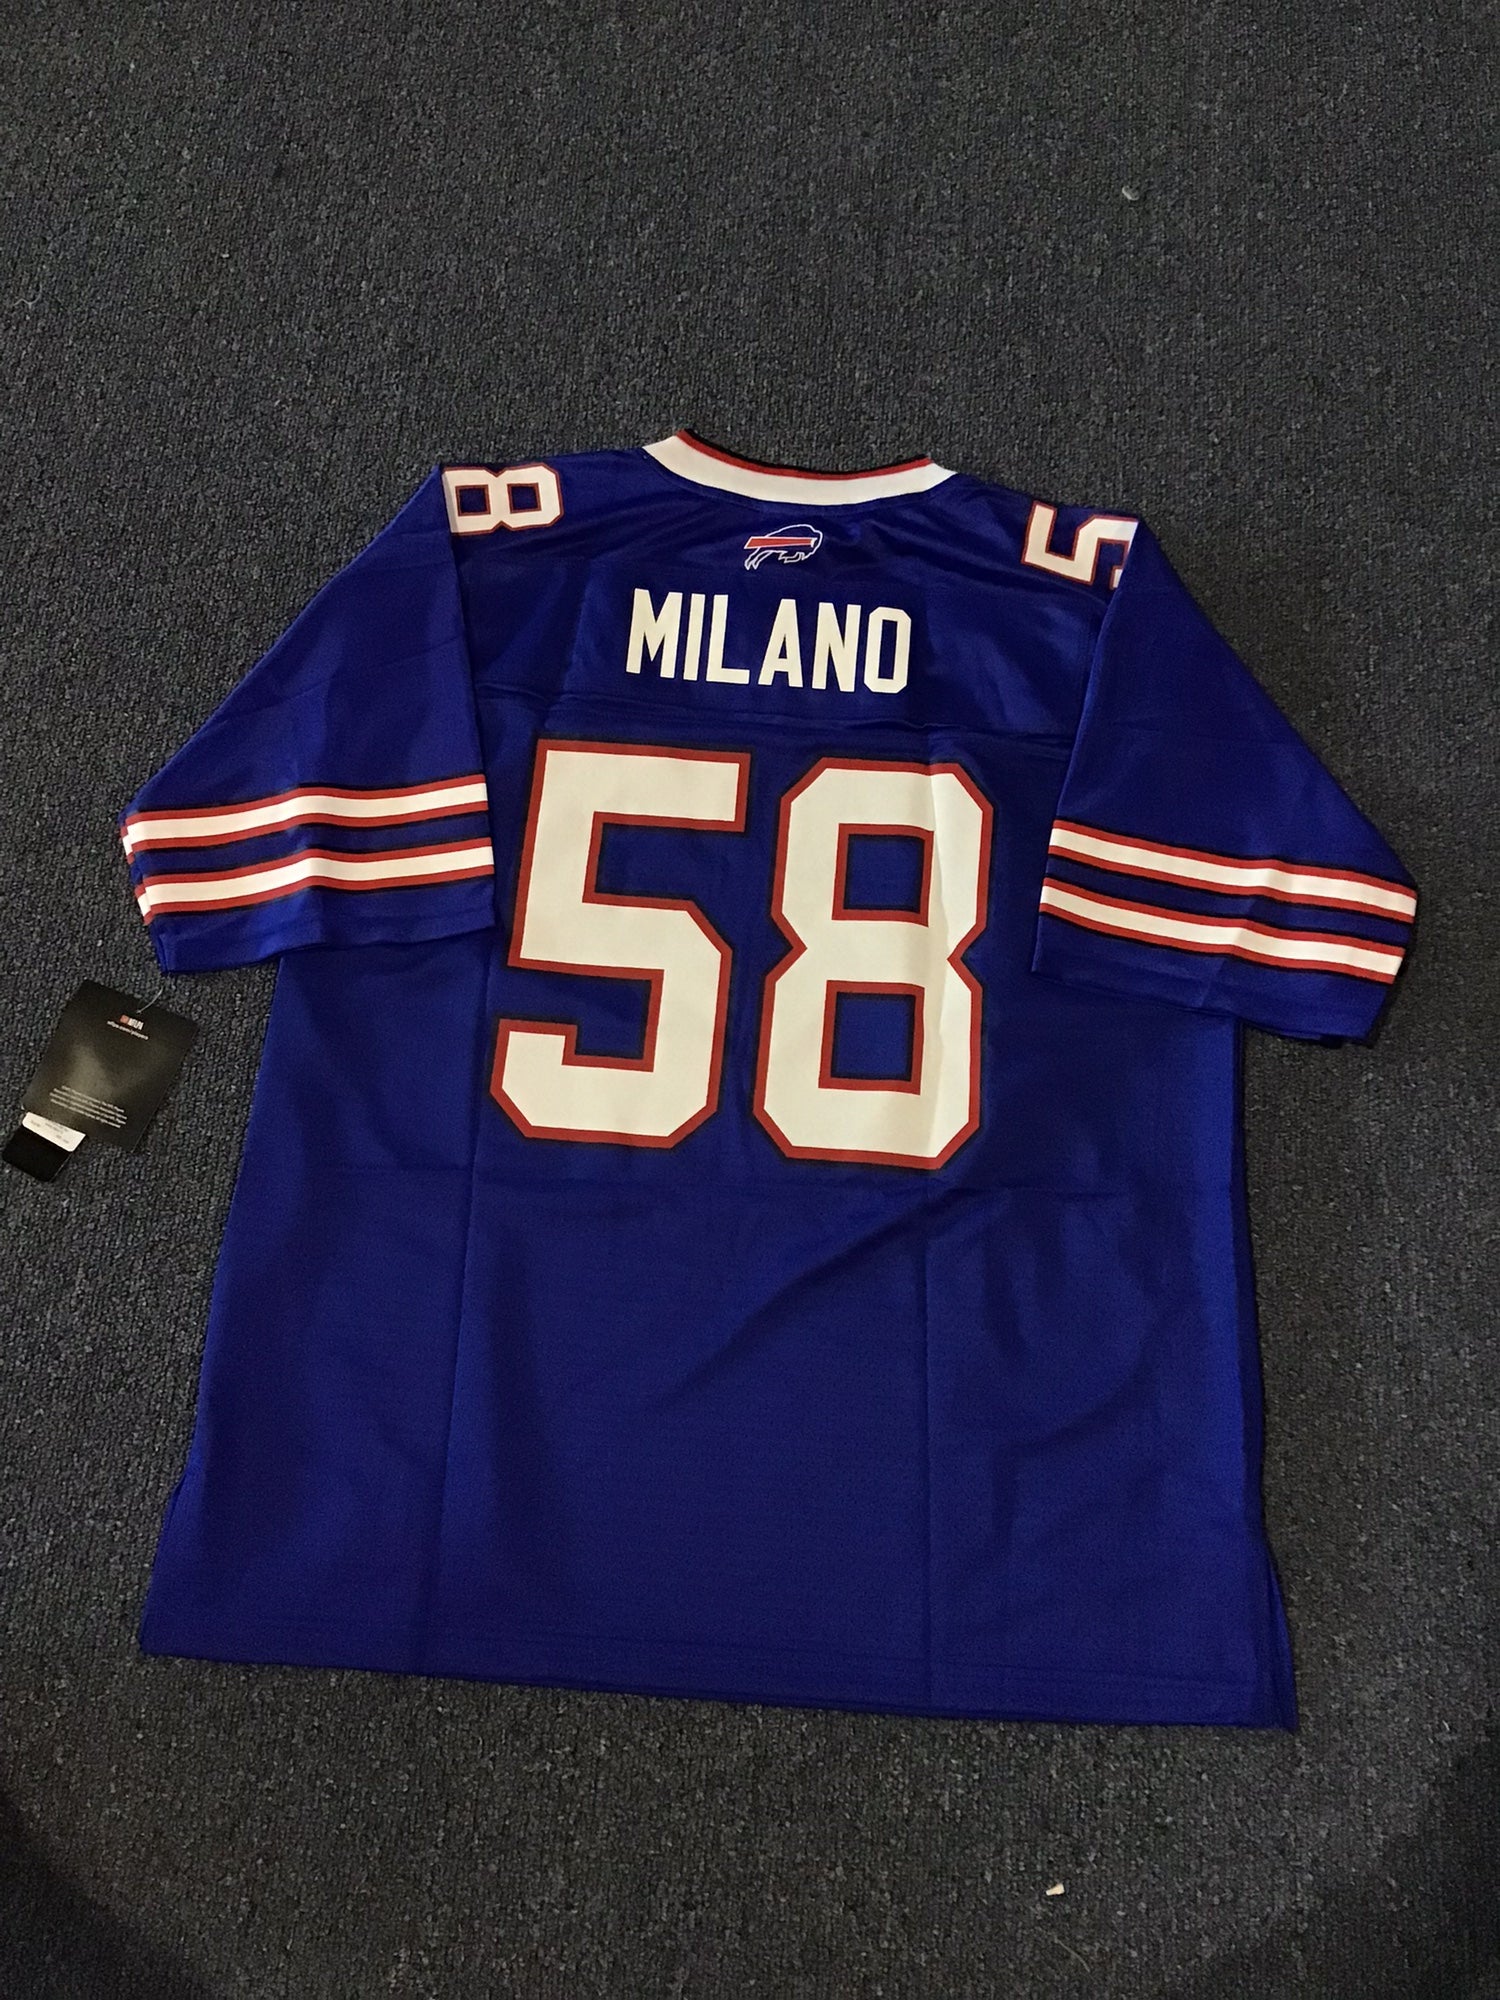 NWT Buffalo Bills Men's Lg. NFL PROLINE Jersey #58 Milano